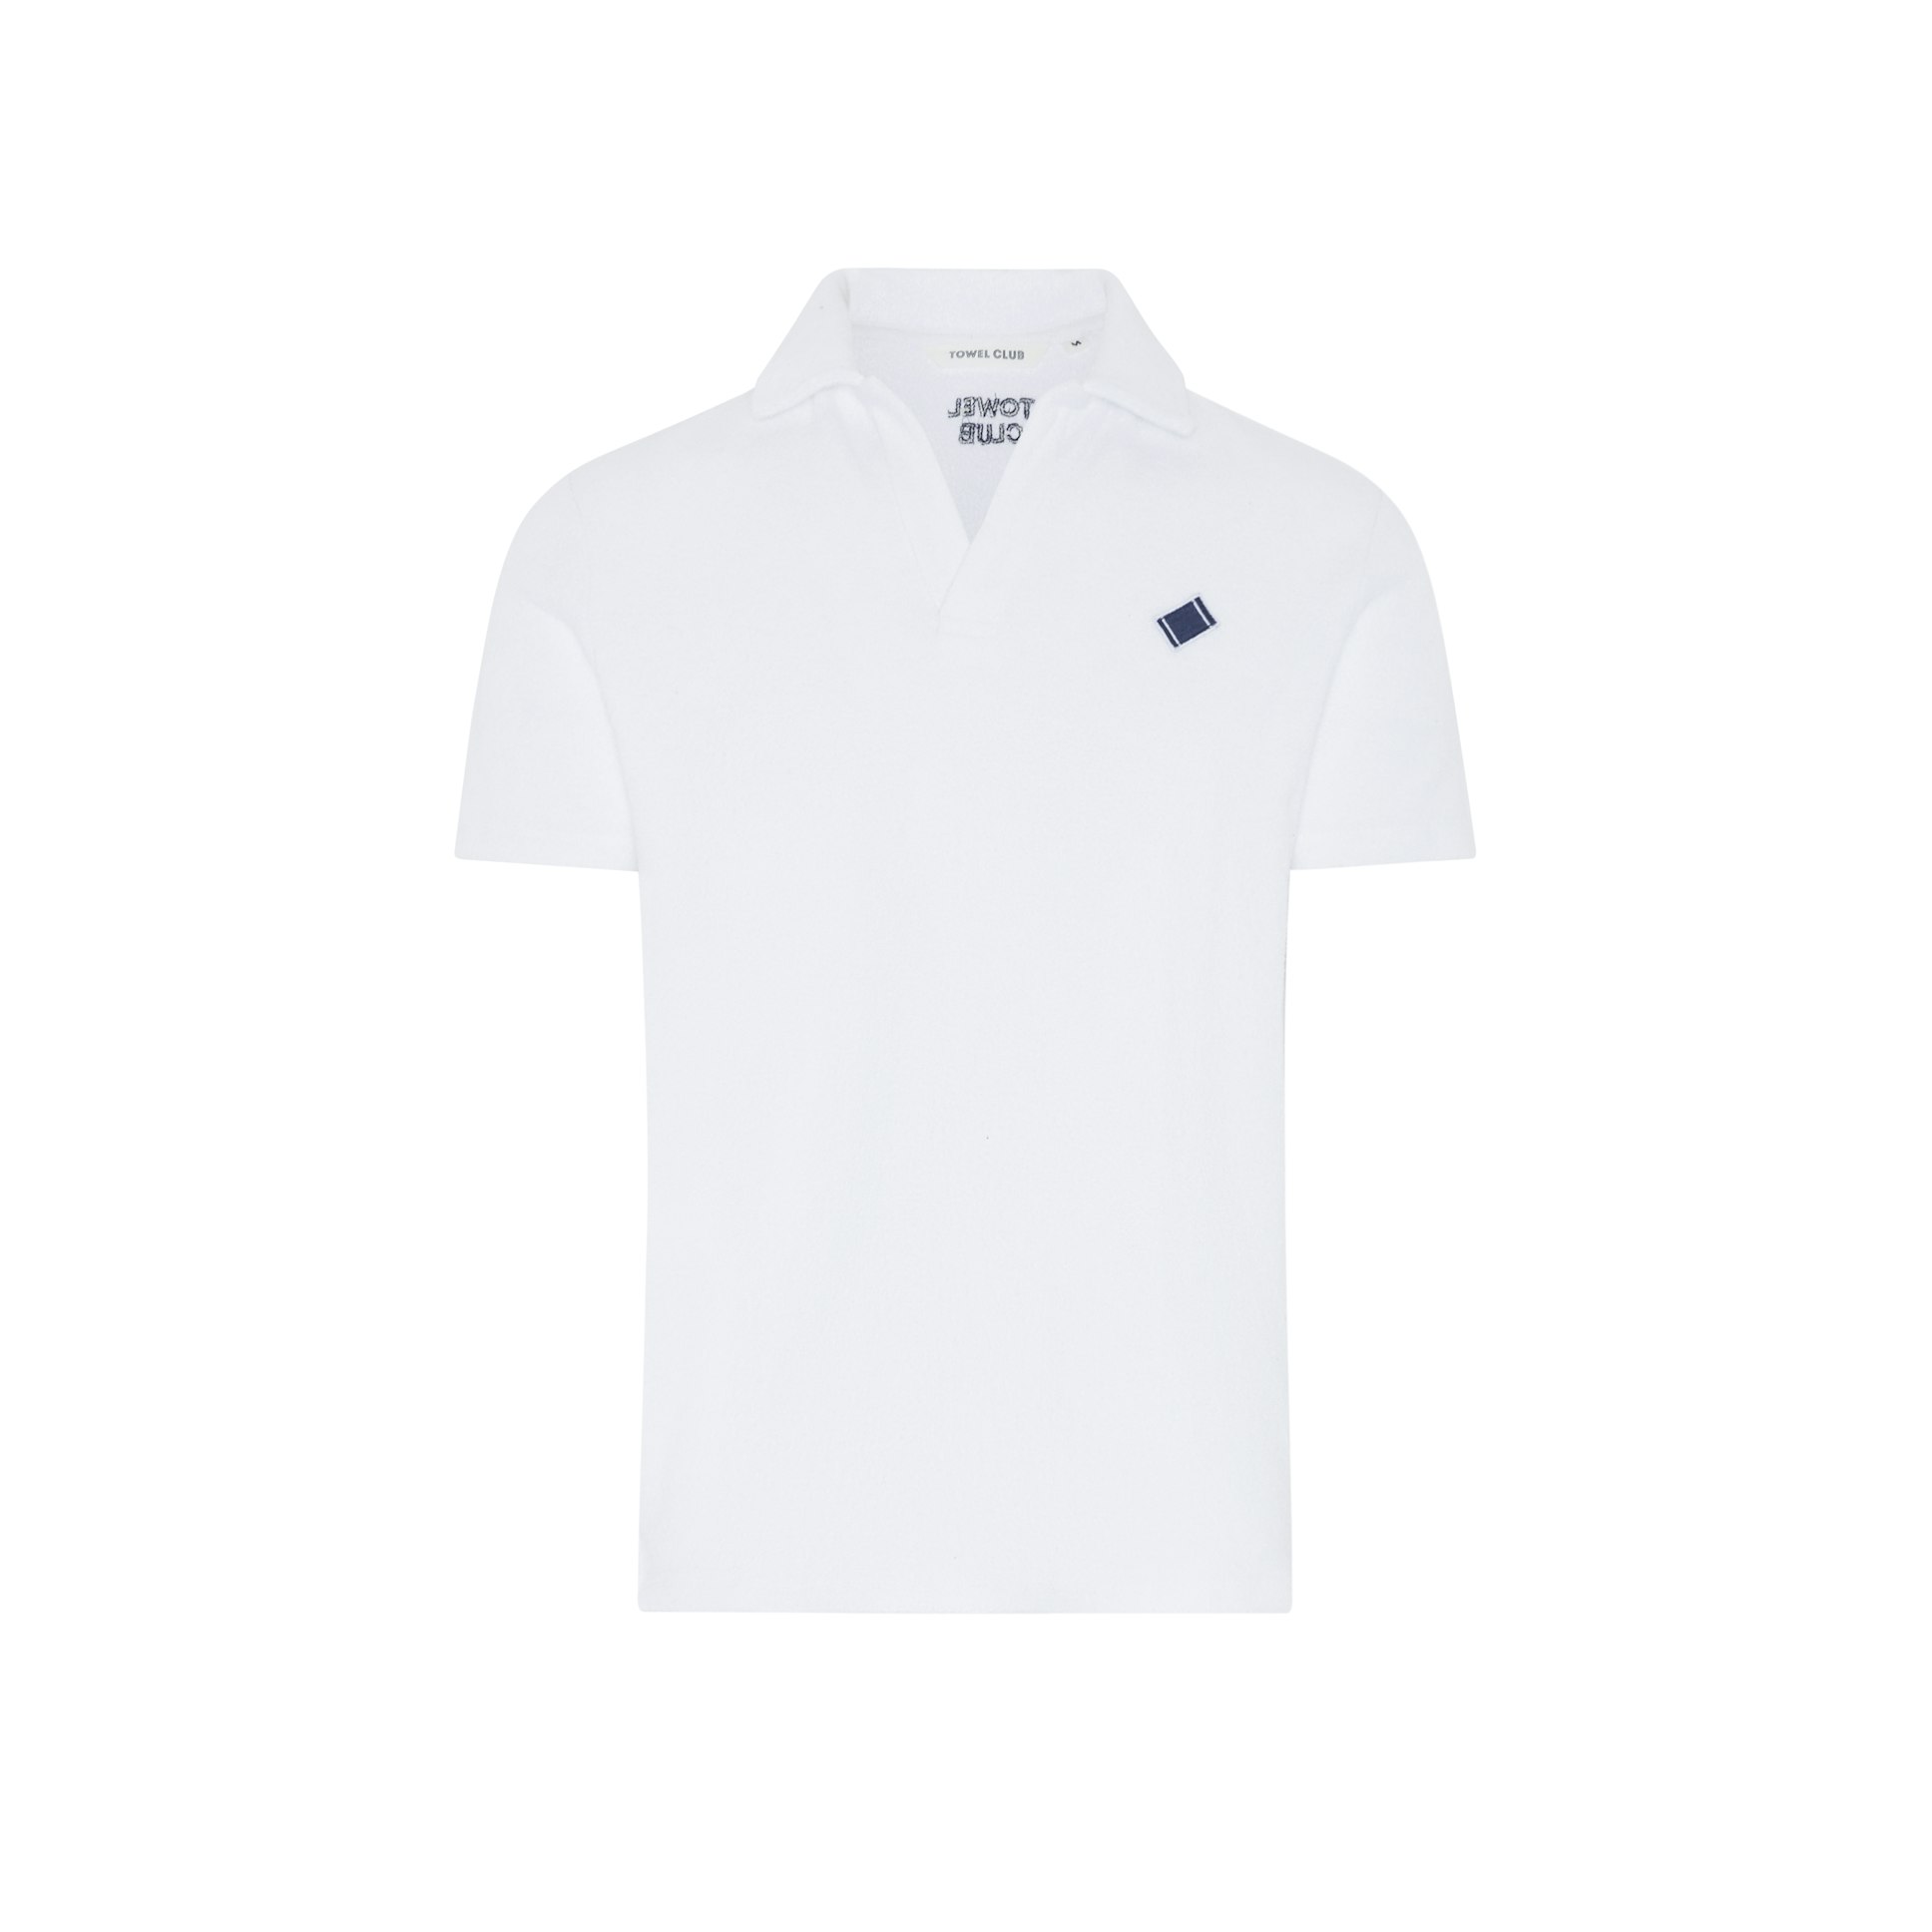 Towel Club Piquet Shirt Weiß